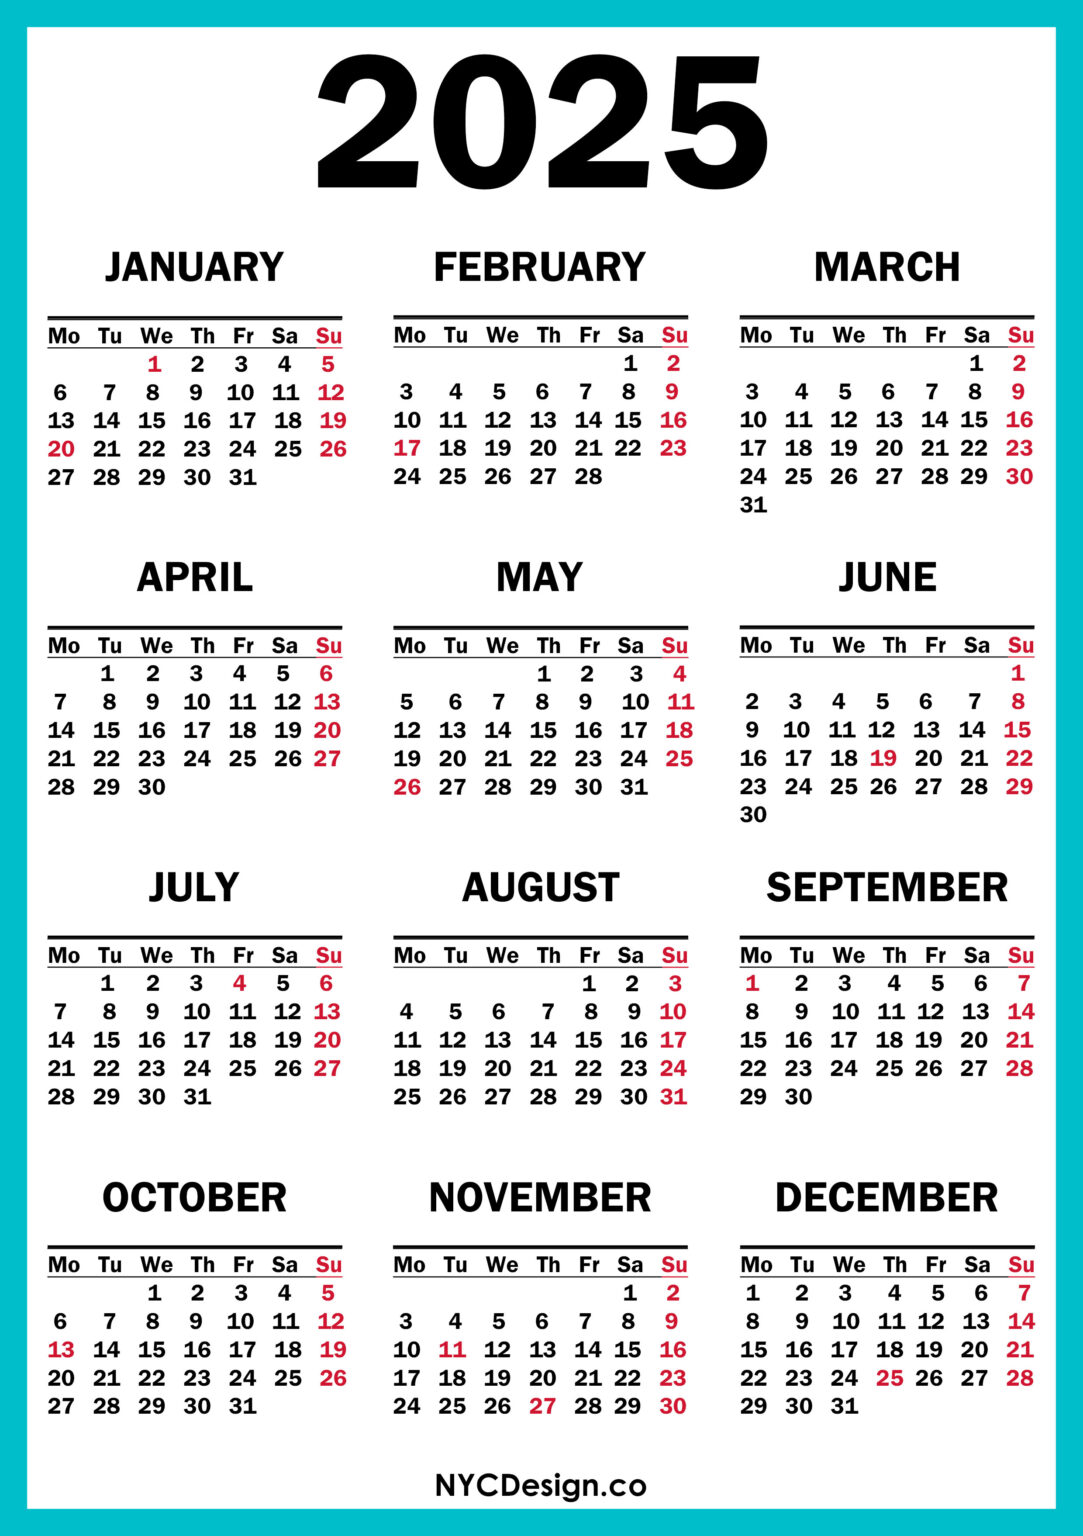 opm-federal-pay-periods-2014-template-calendar-design